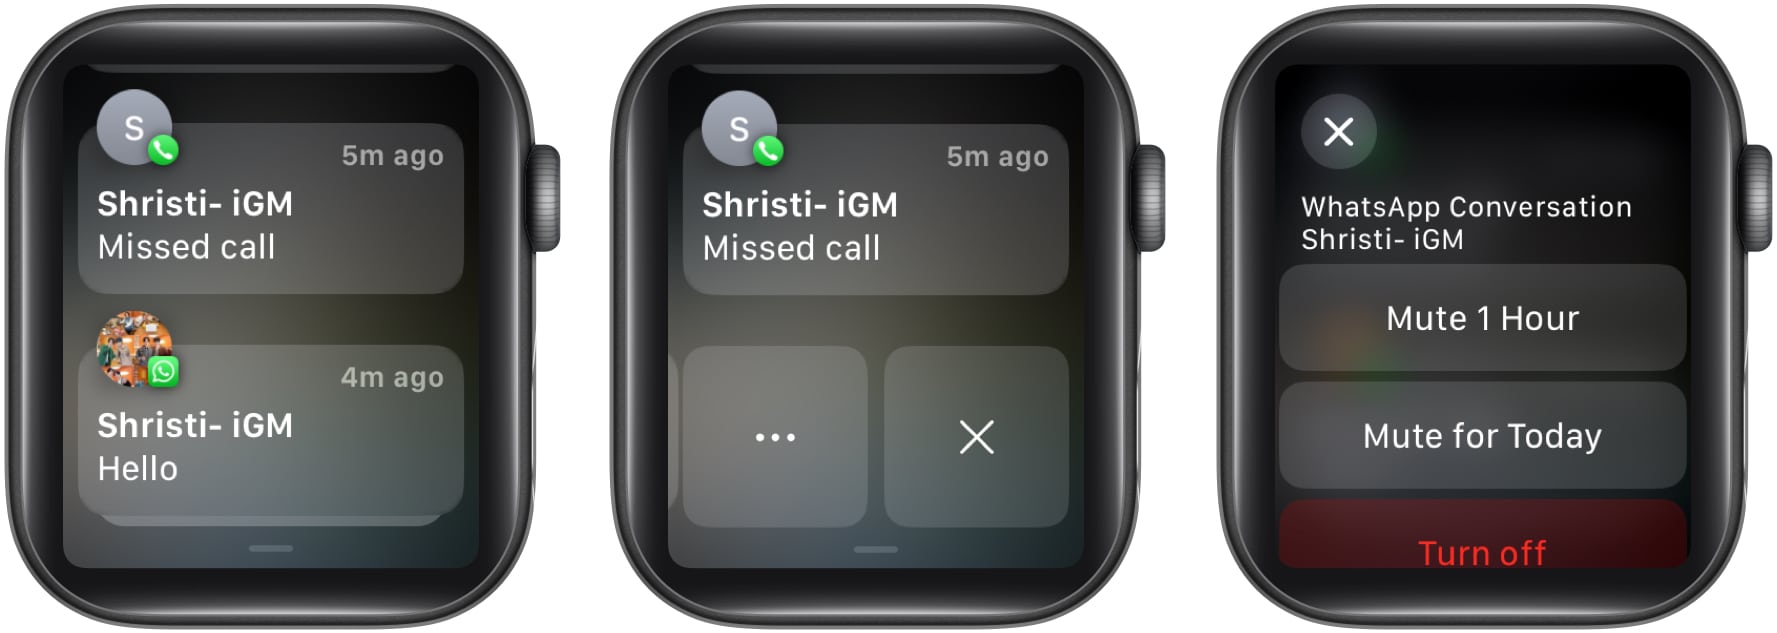 Redamkan pemberitahuan pada Apple Watch